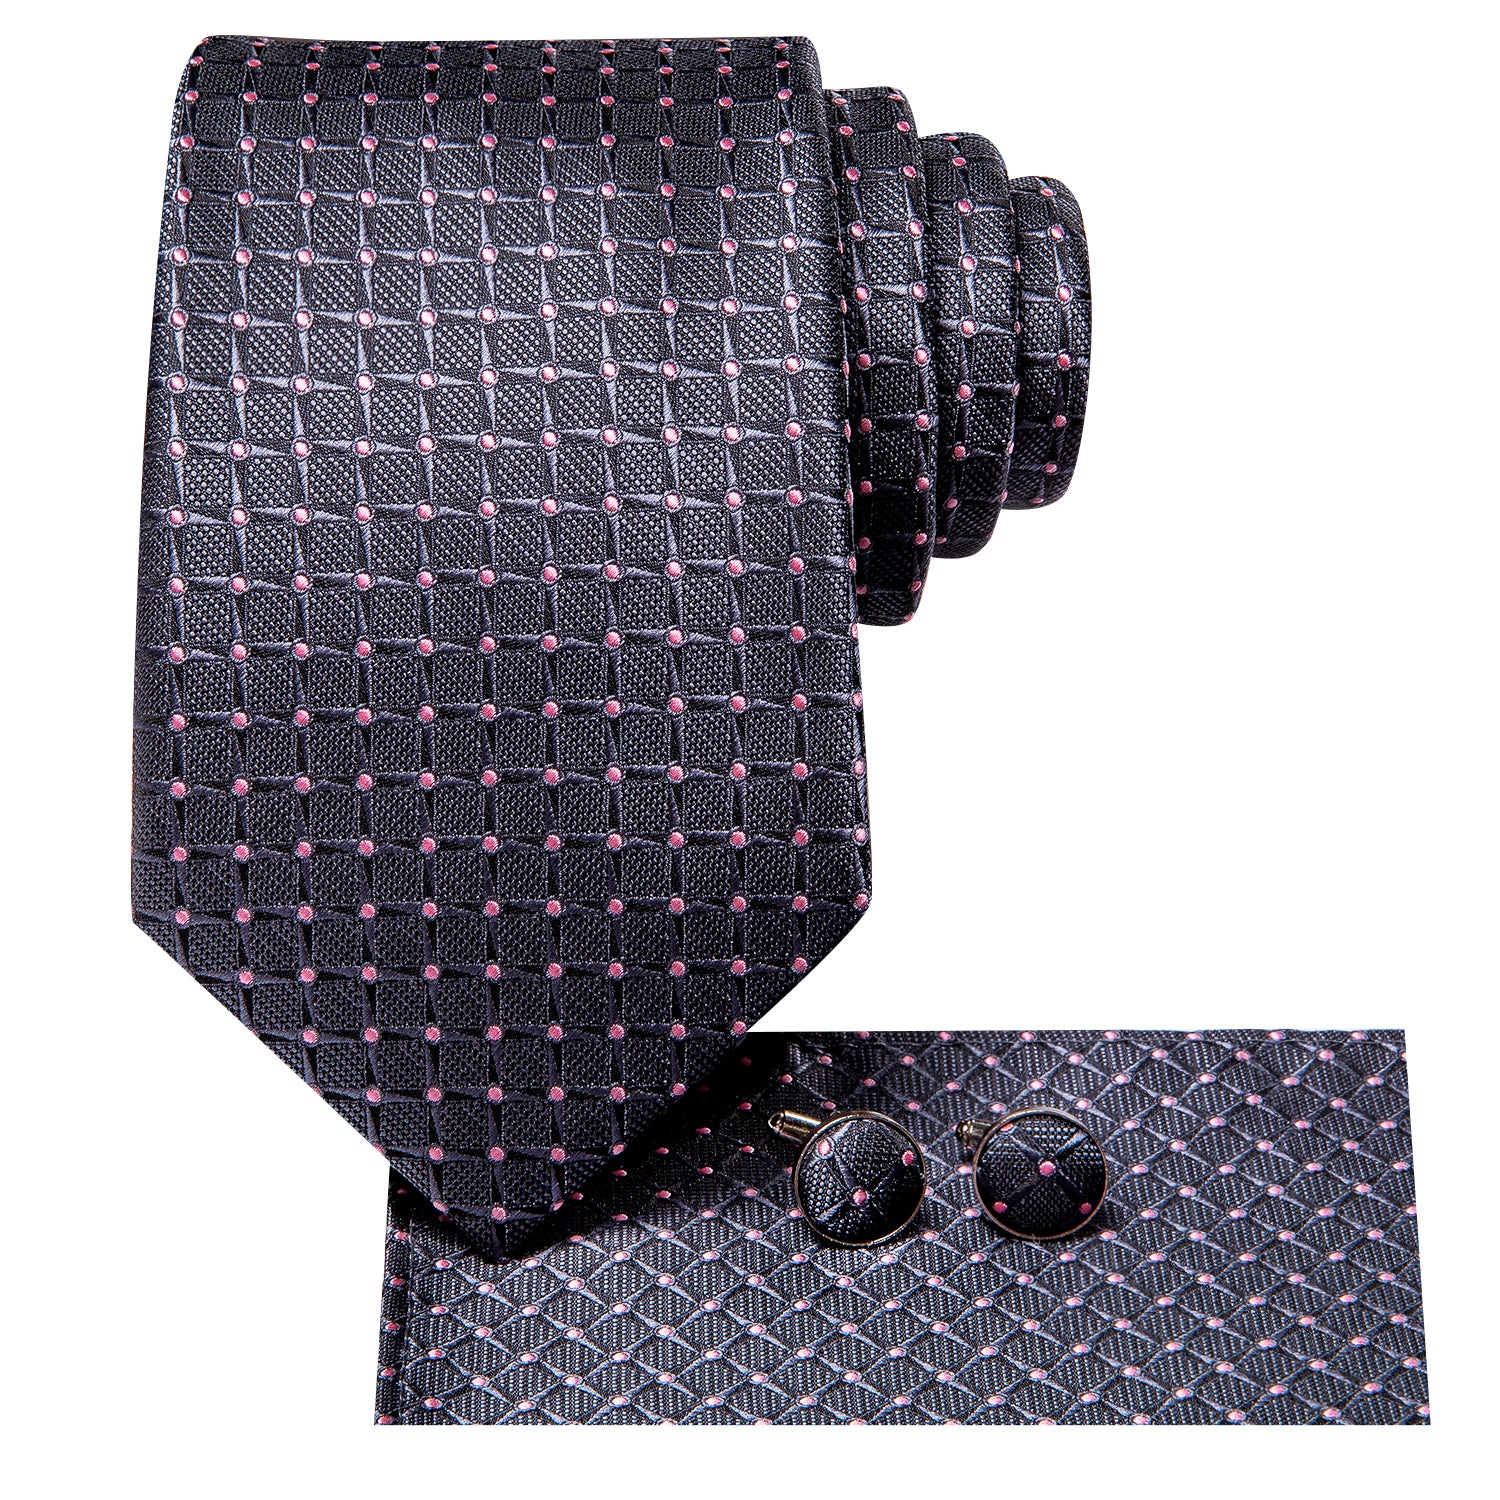 Hi-Tie Grey Pink Novelty Men's Tie Pocket Square Cufflinks Set